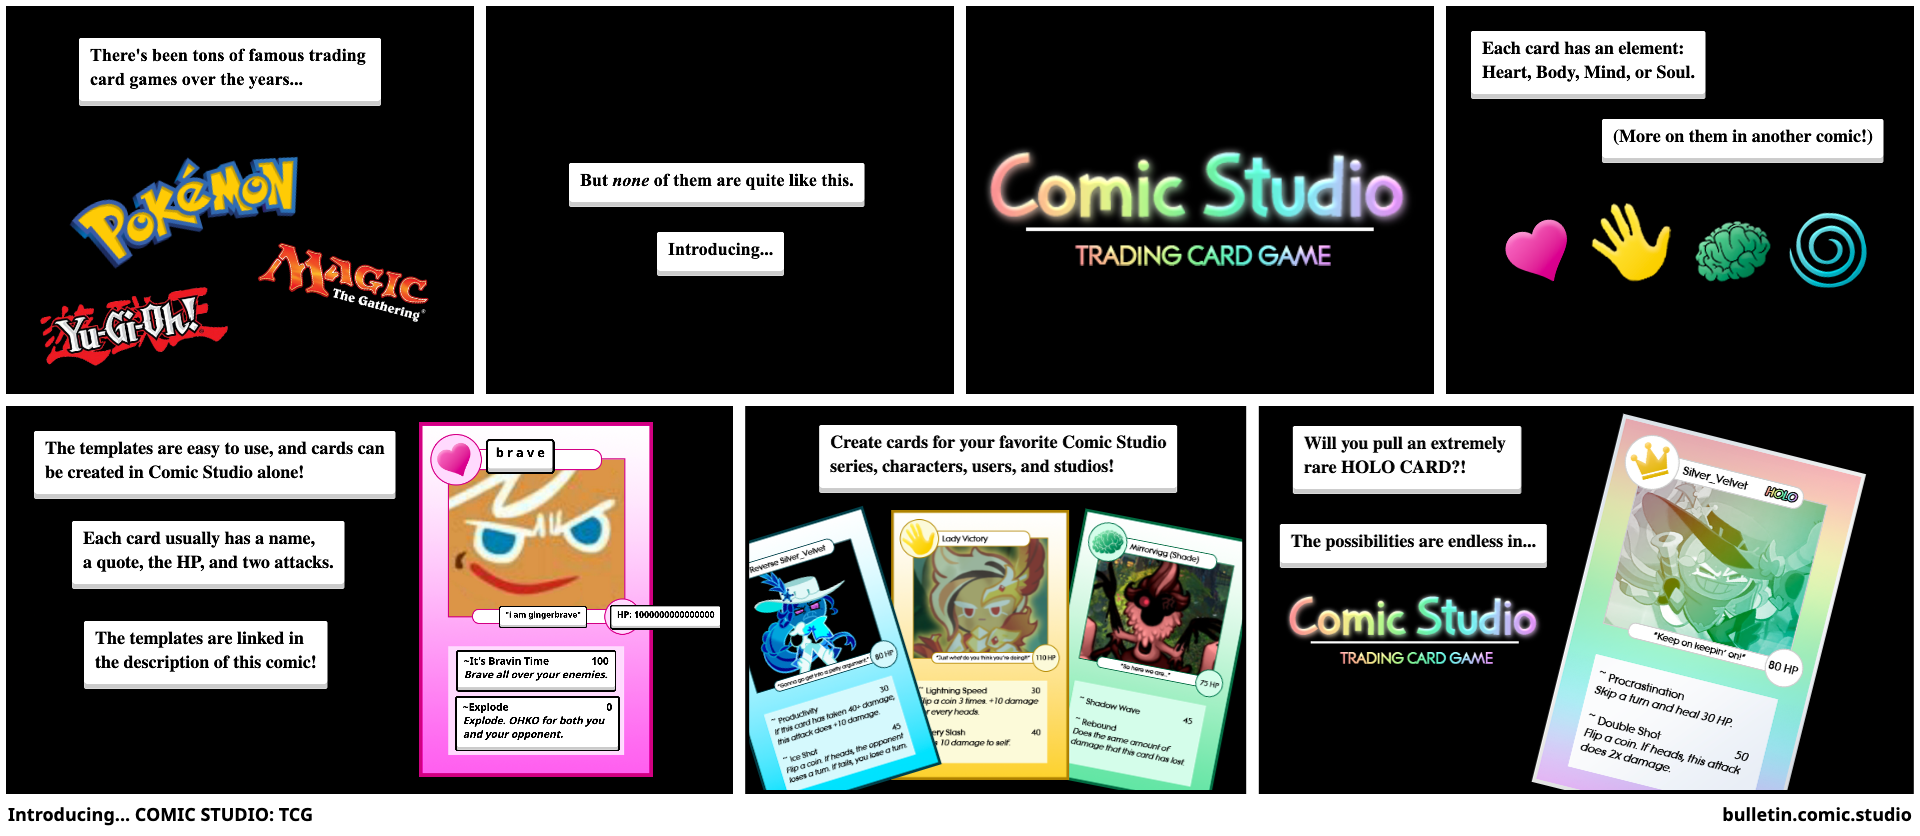 Introducing... COMIC STUDIO: TCG